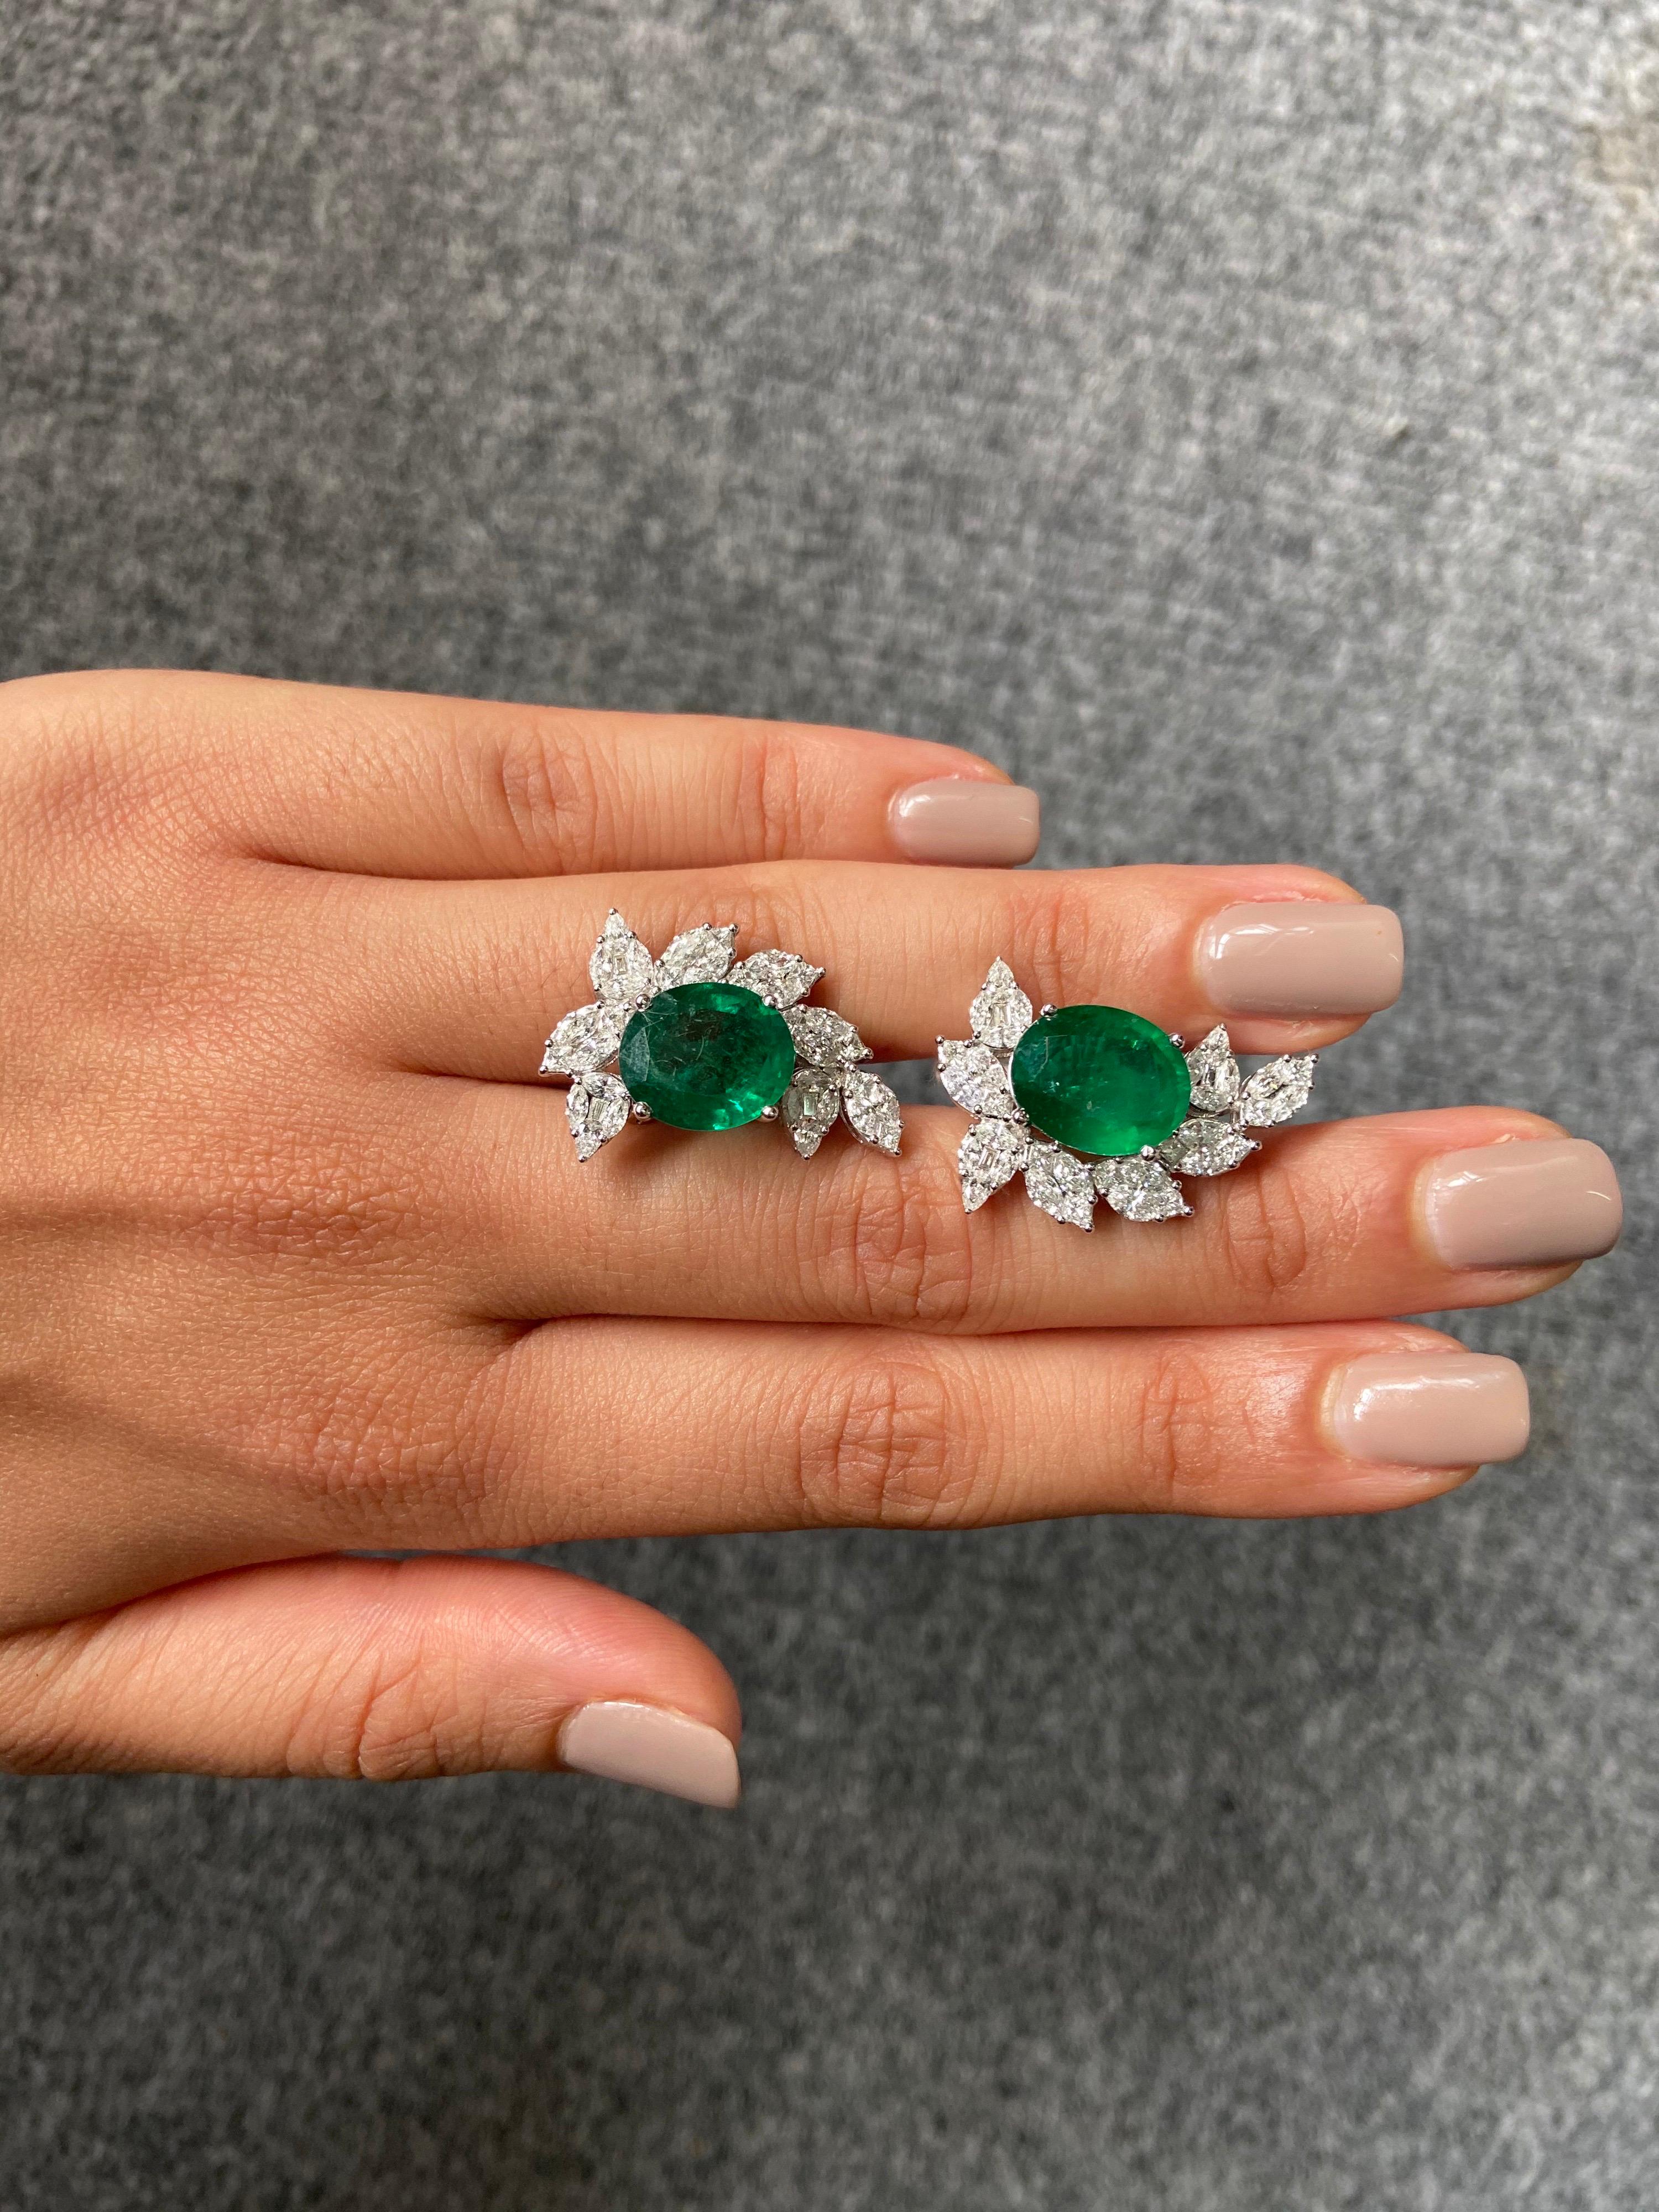 Oval Cut 10.85 Carat Emerald and Diamond Stud Earrings